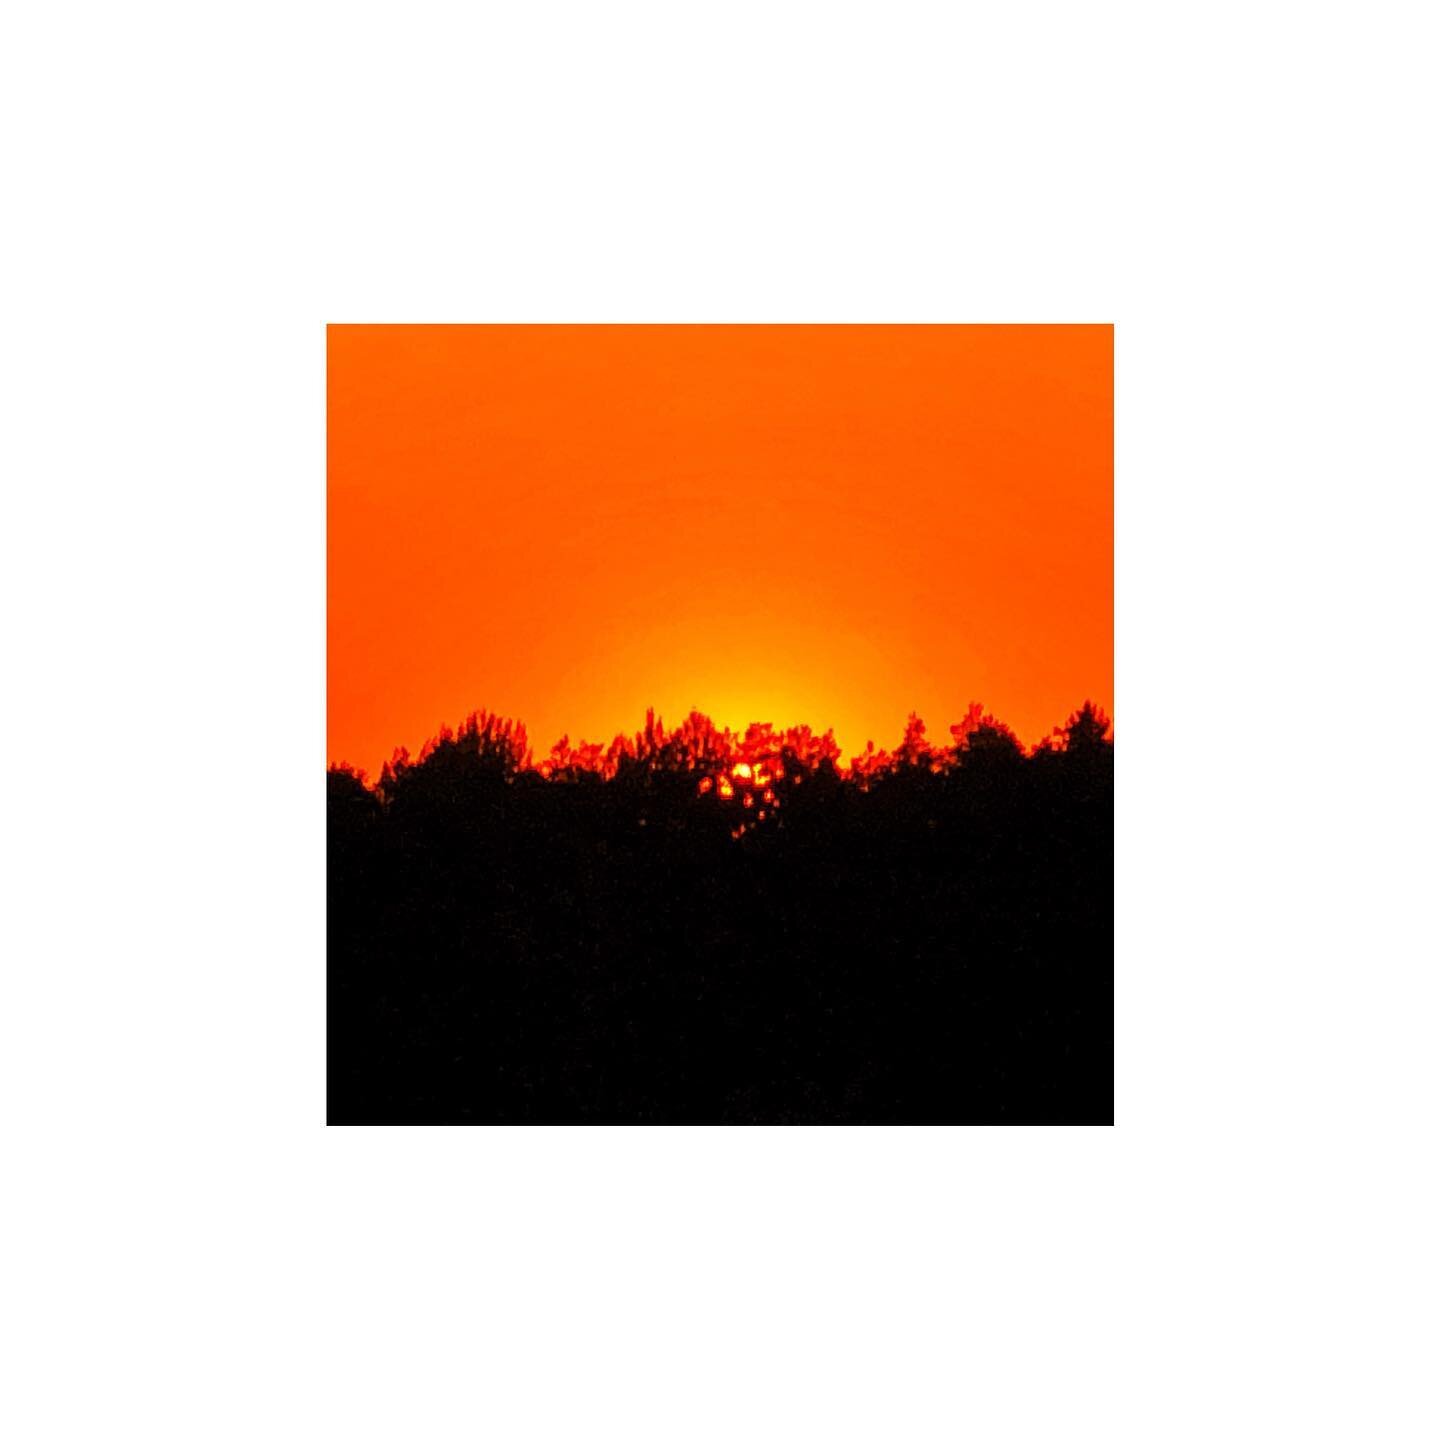 #OsloSun#orange#summersunset#sunbehindtrees#Aspond#Oslofjord#shotoniphone#nofilter#extremezoom#digitalzoom#orangeandblack